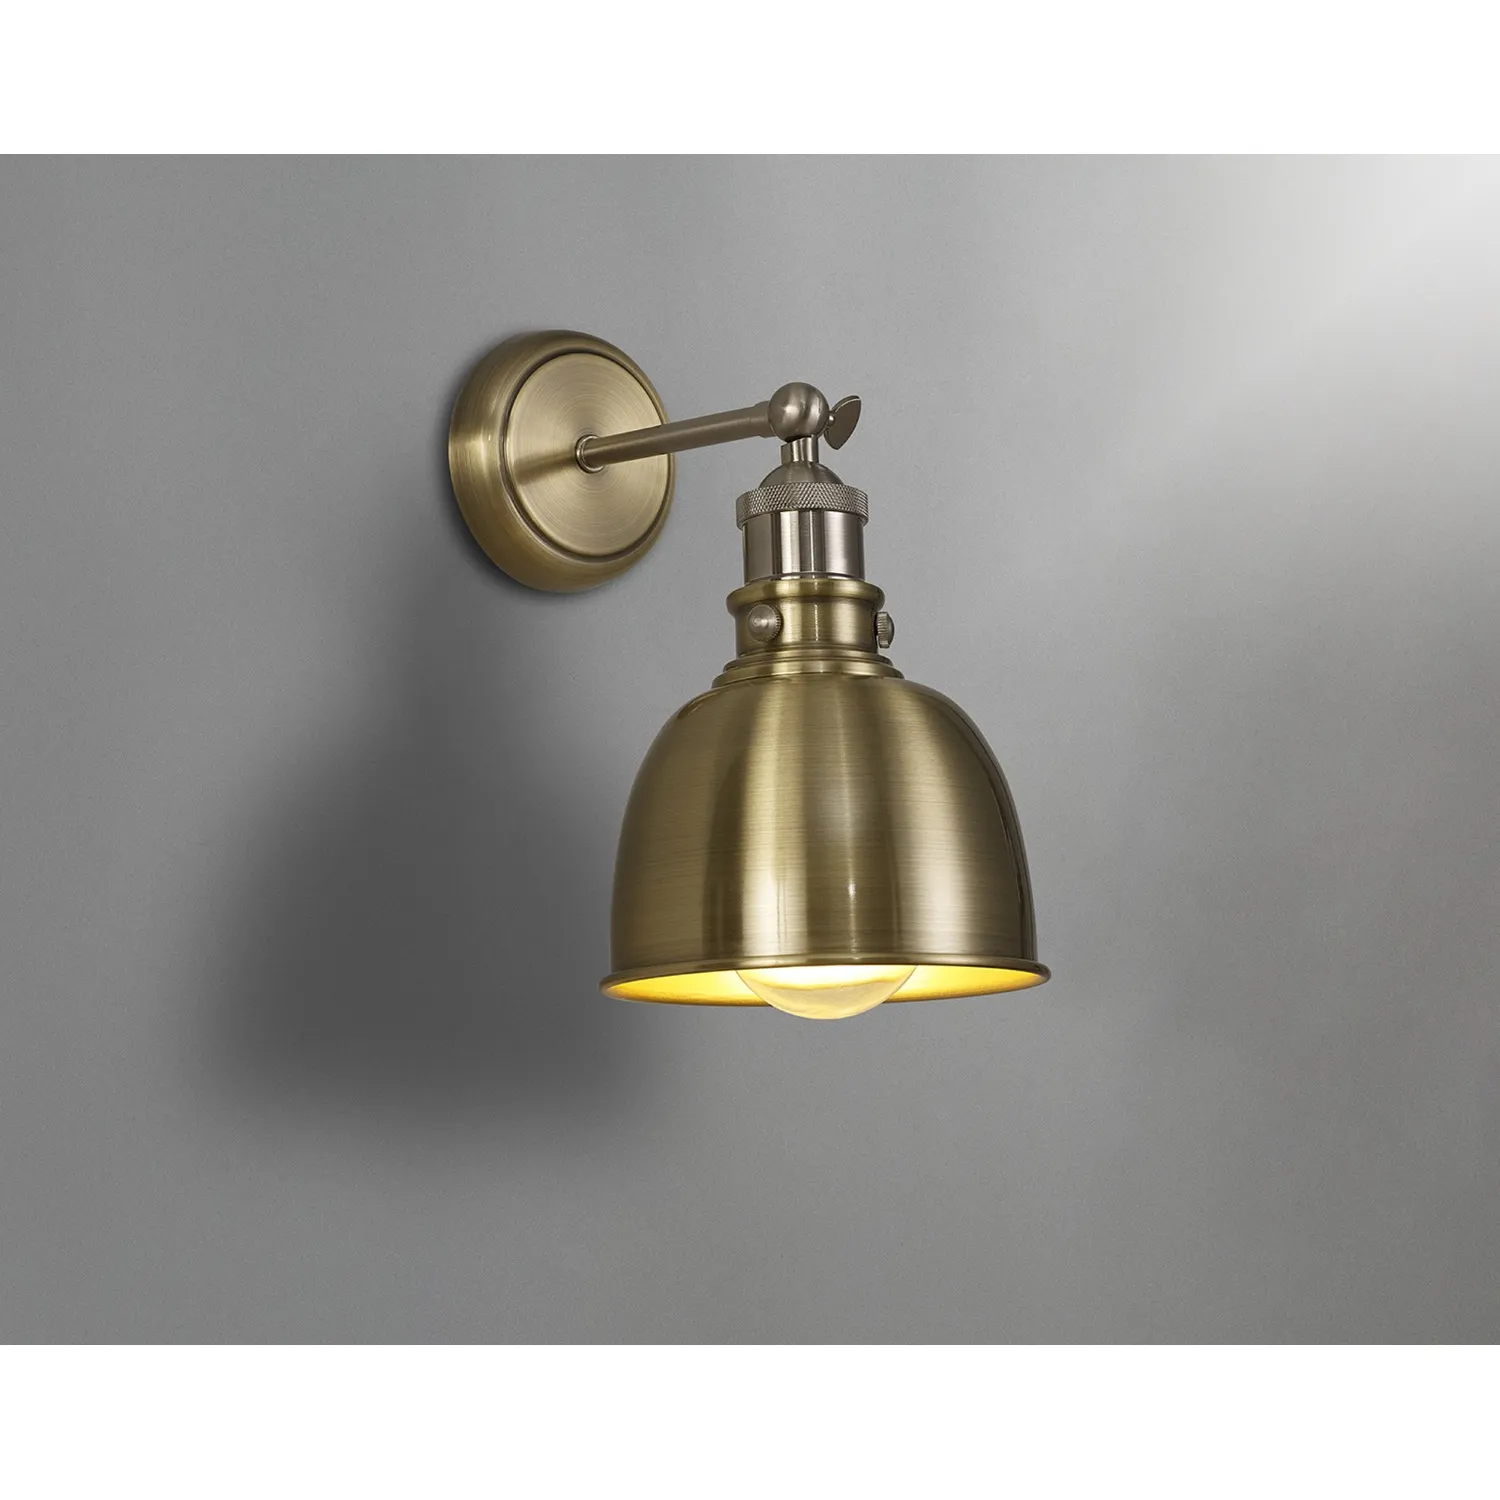 Savoy Adjustable Wall Lamp, 1 x E27, Satin Nickel Antique Brass Gold